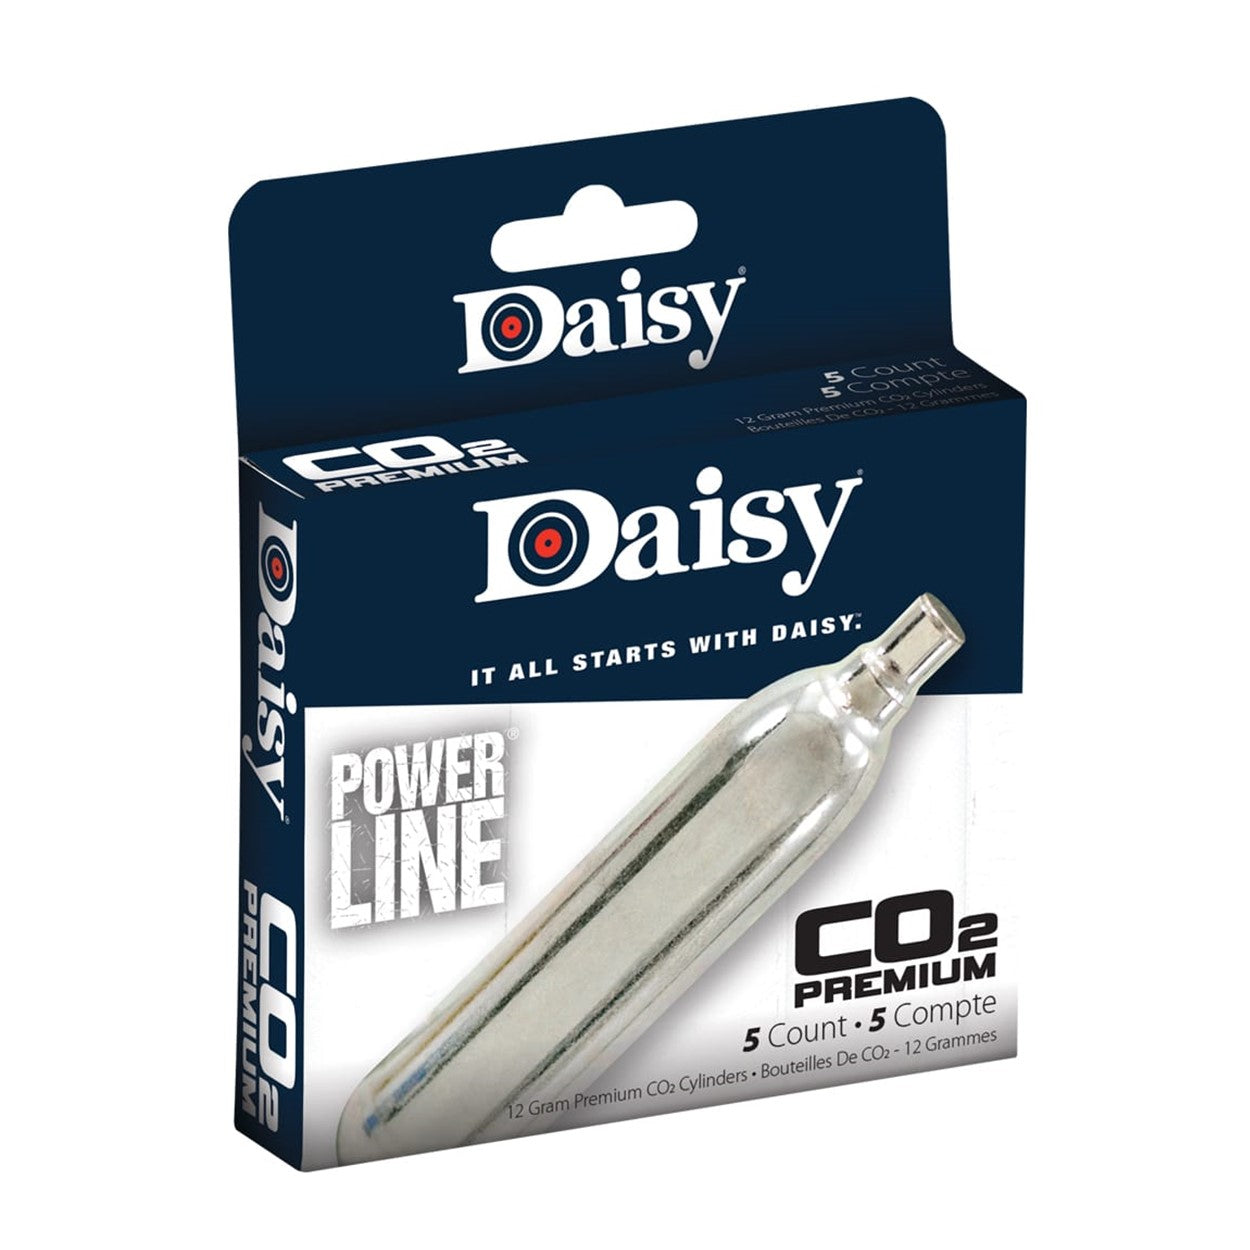 DAISY Powerline 12-Gram CO2 Cylinders